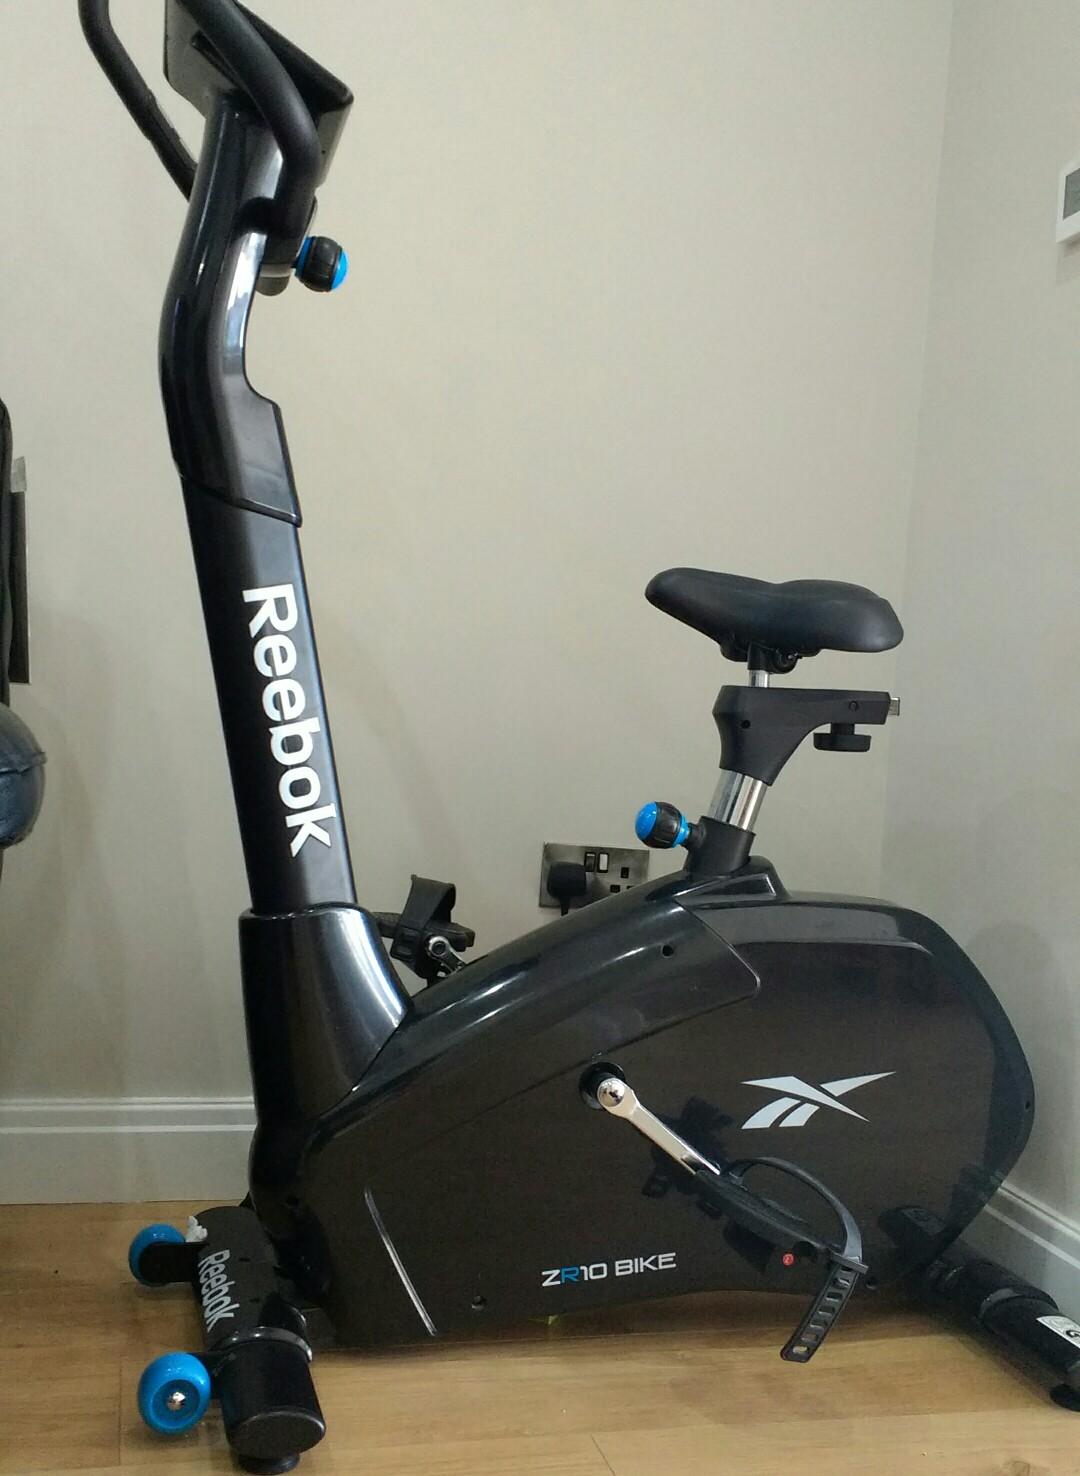 reebok zr10 exercise bike